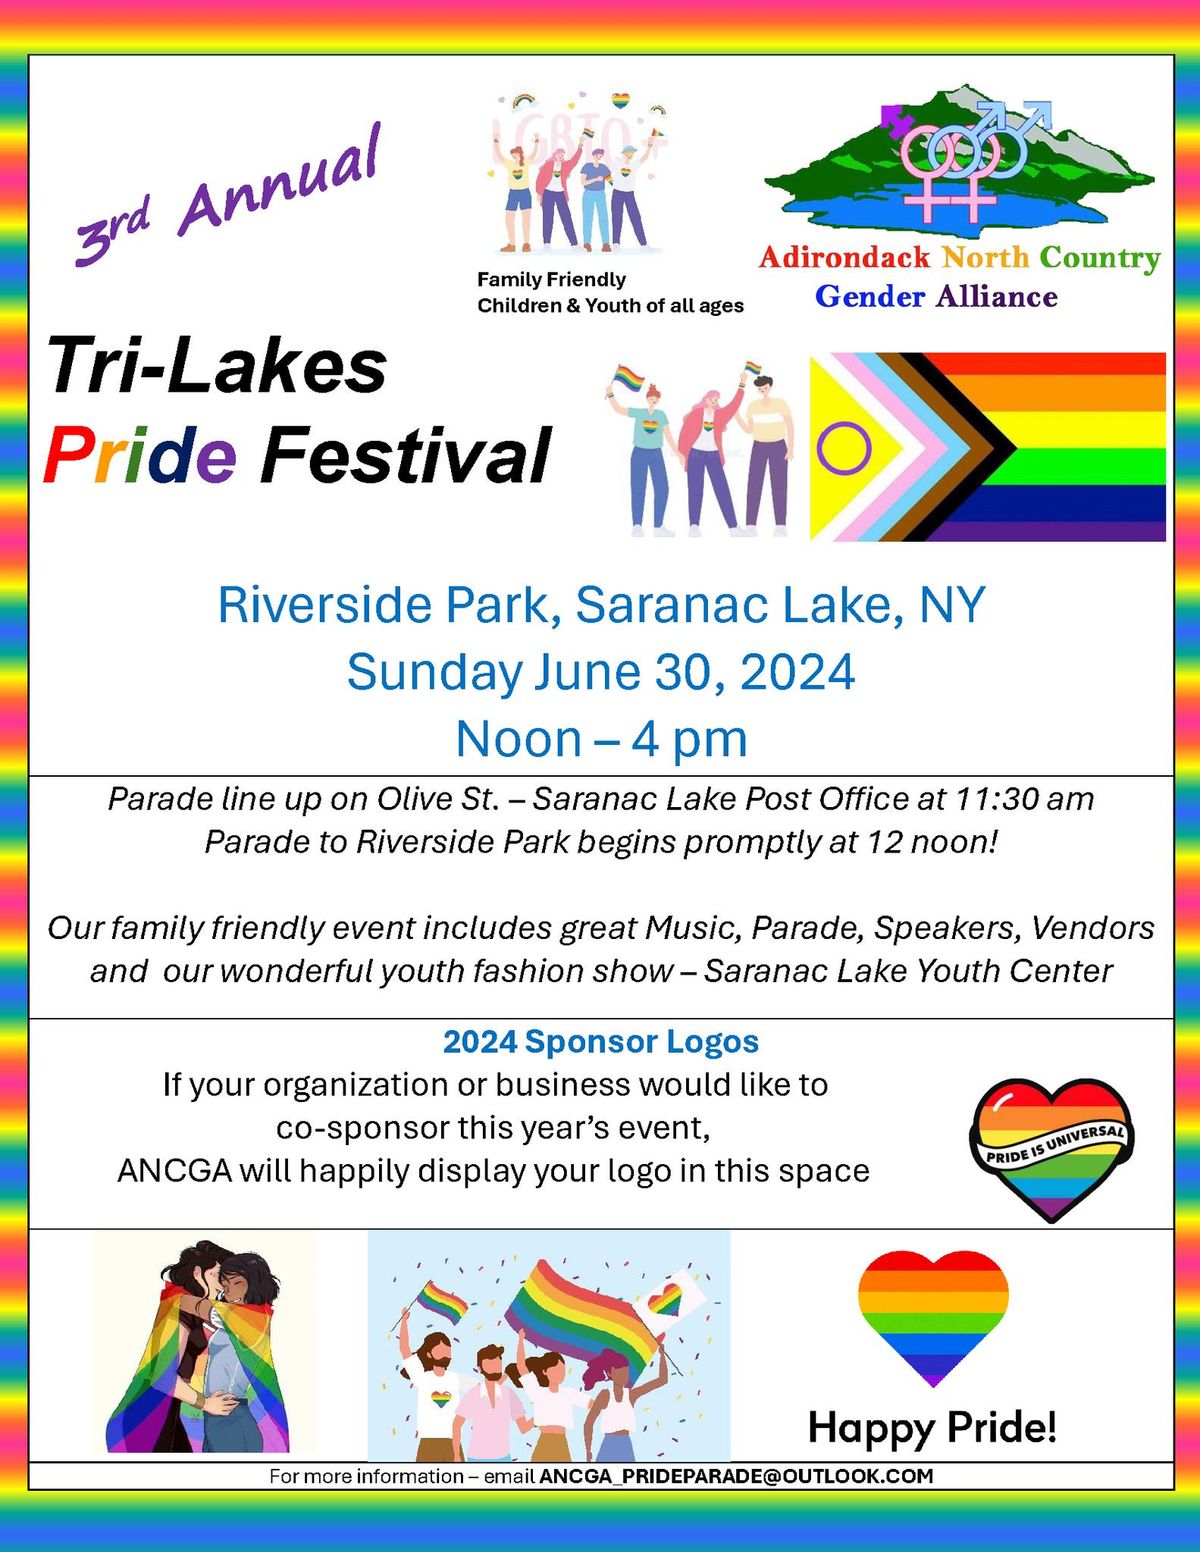  3rd Annual Tri-Lakes Pride Parade and Festival 